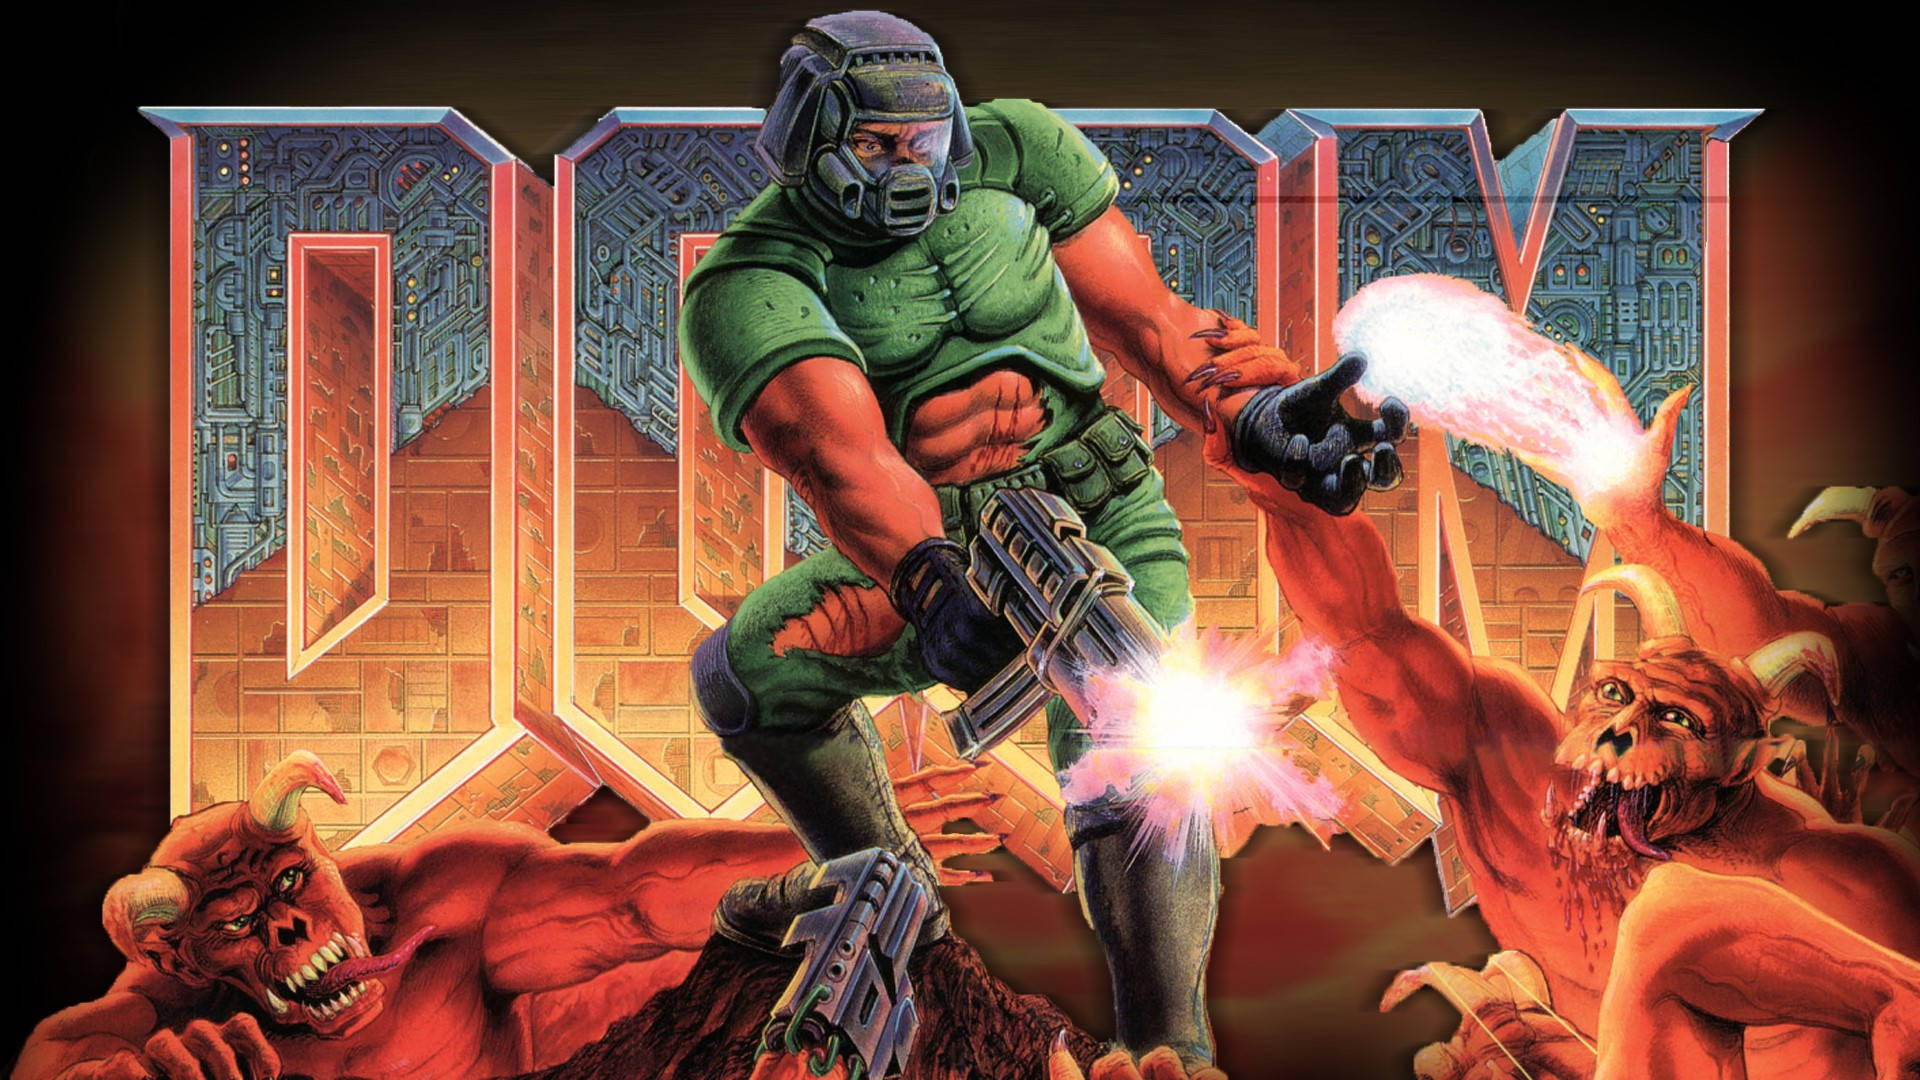 Battle against alien forces in the new Doom game. Wallpaper